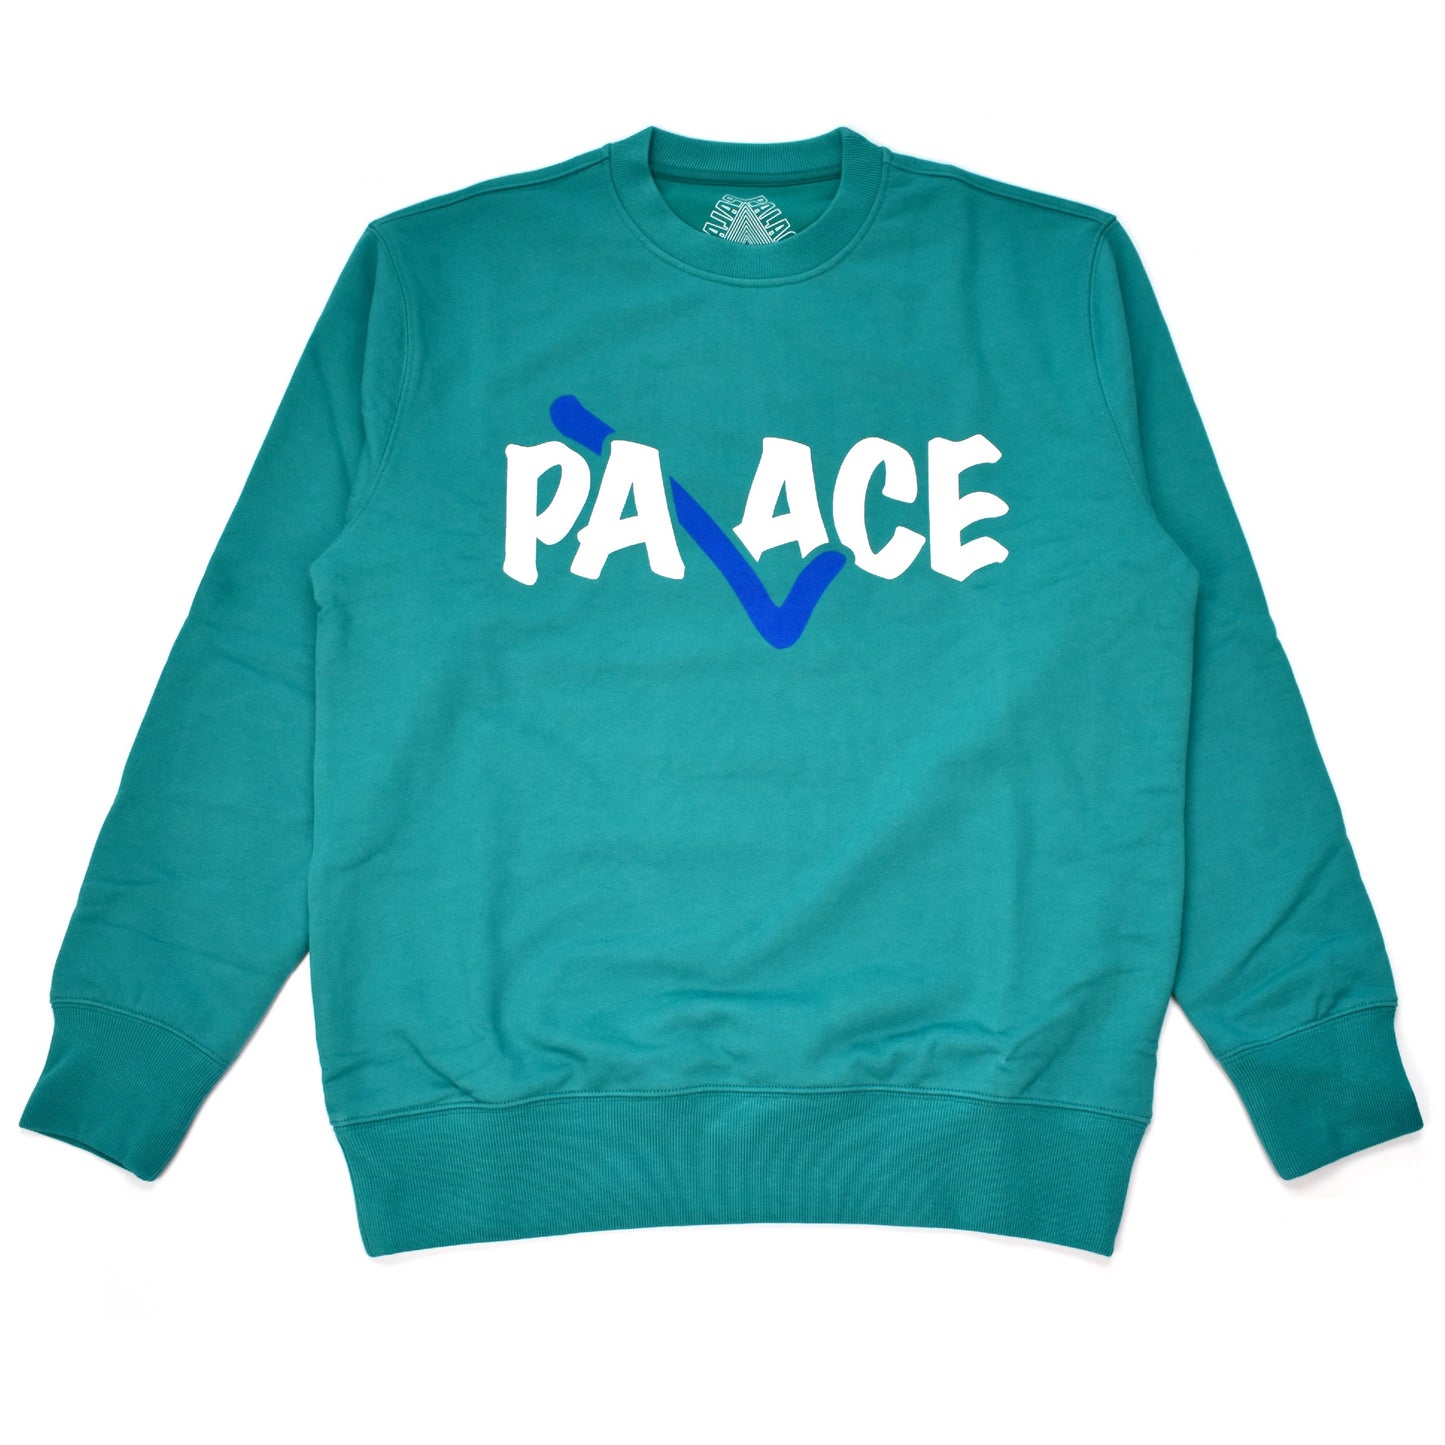 Palace - Teal Correct Logo Sweatshirt